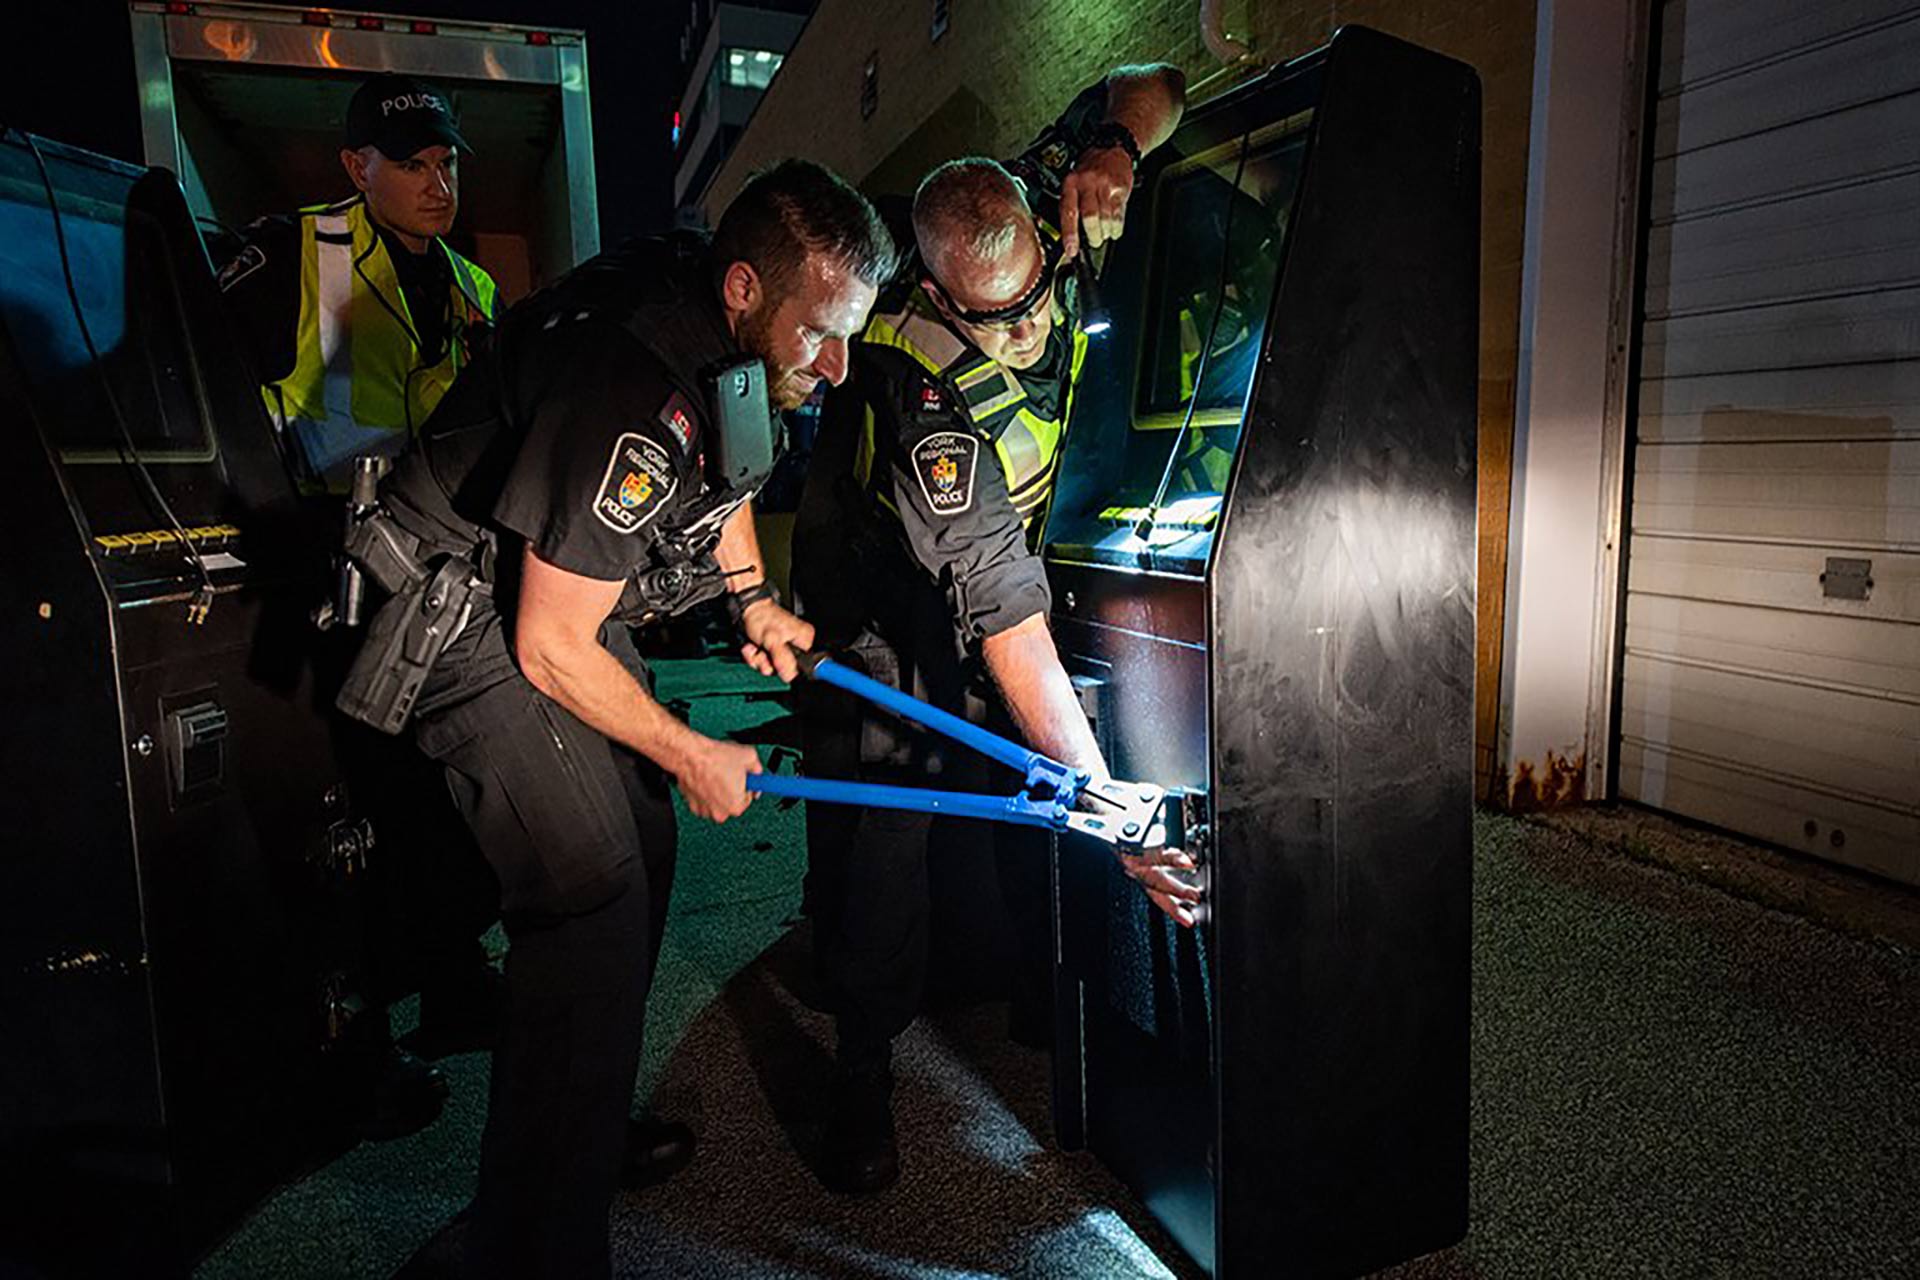 Police open a gaming machine qhiqhhiuuiqhtinv